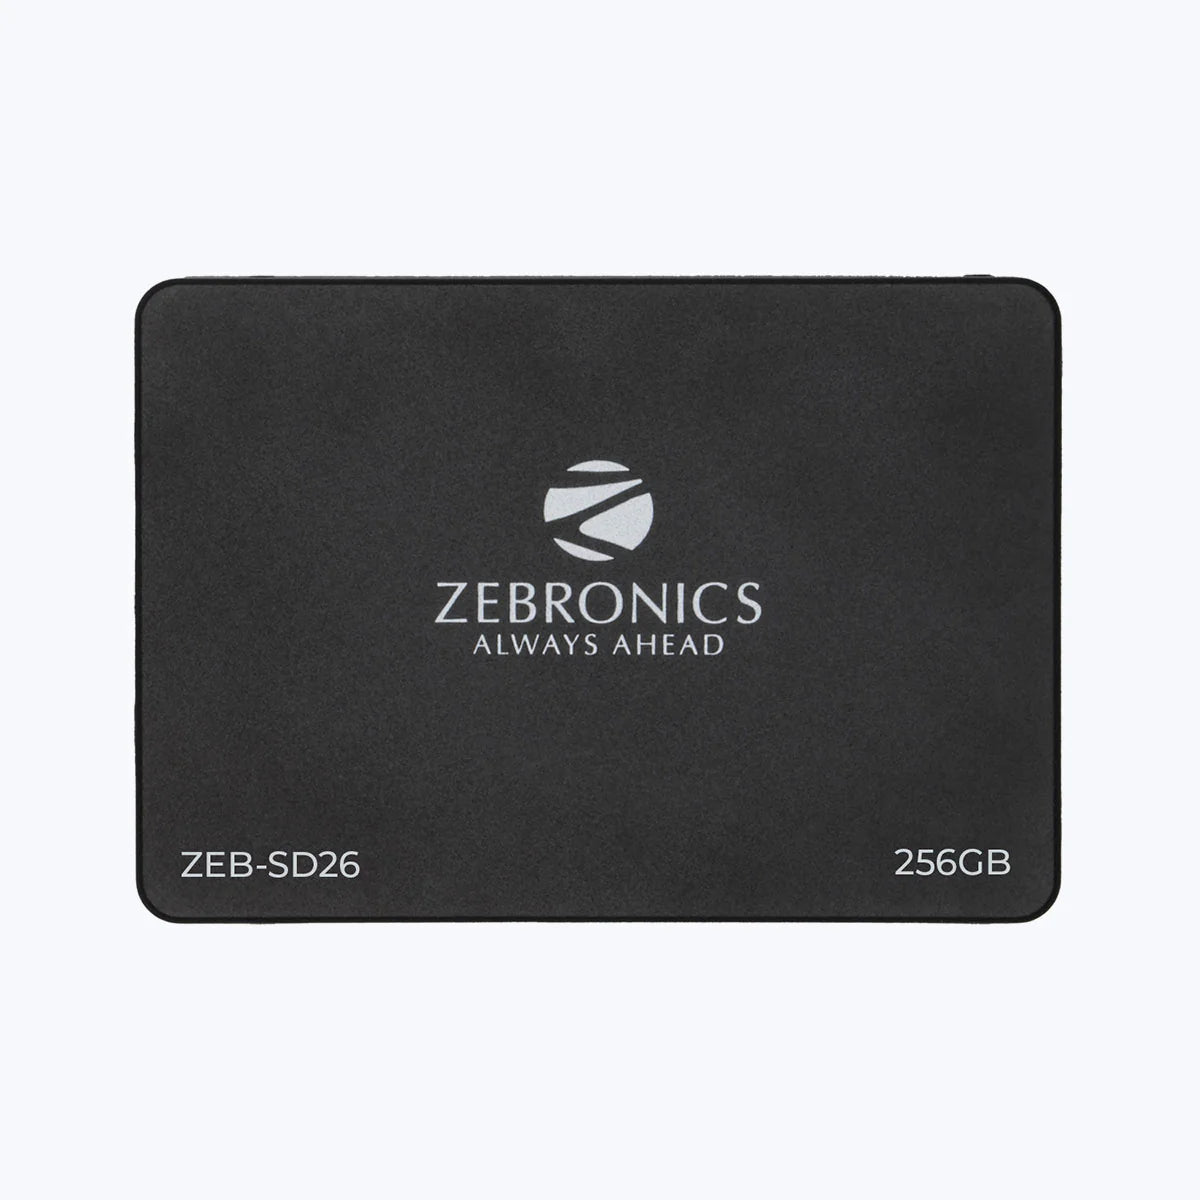 ZEBRONICS 256GB S SD HARD DISK SD26